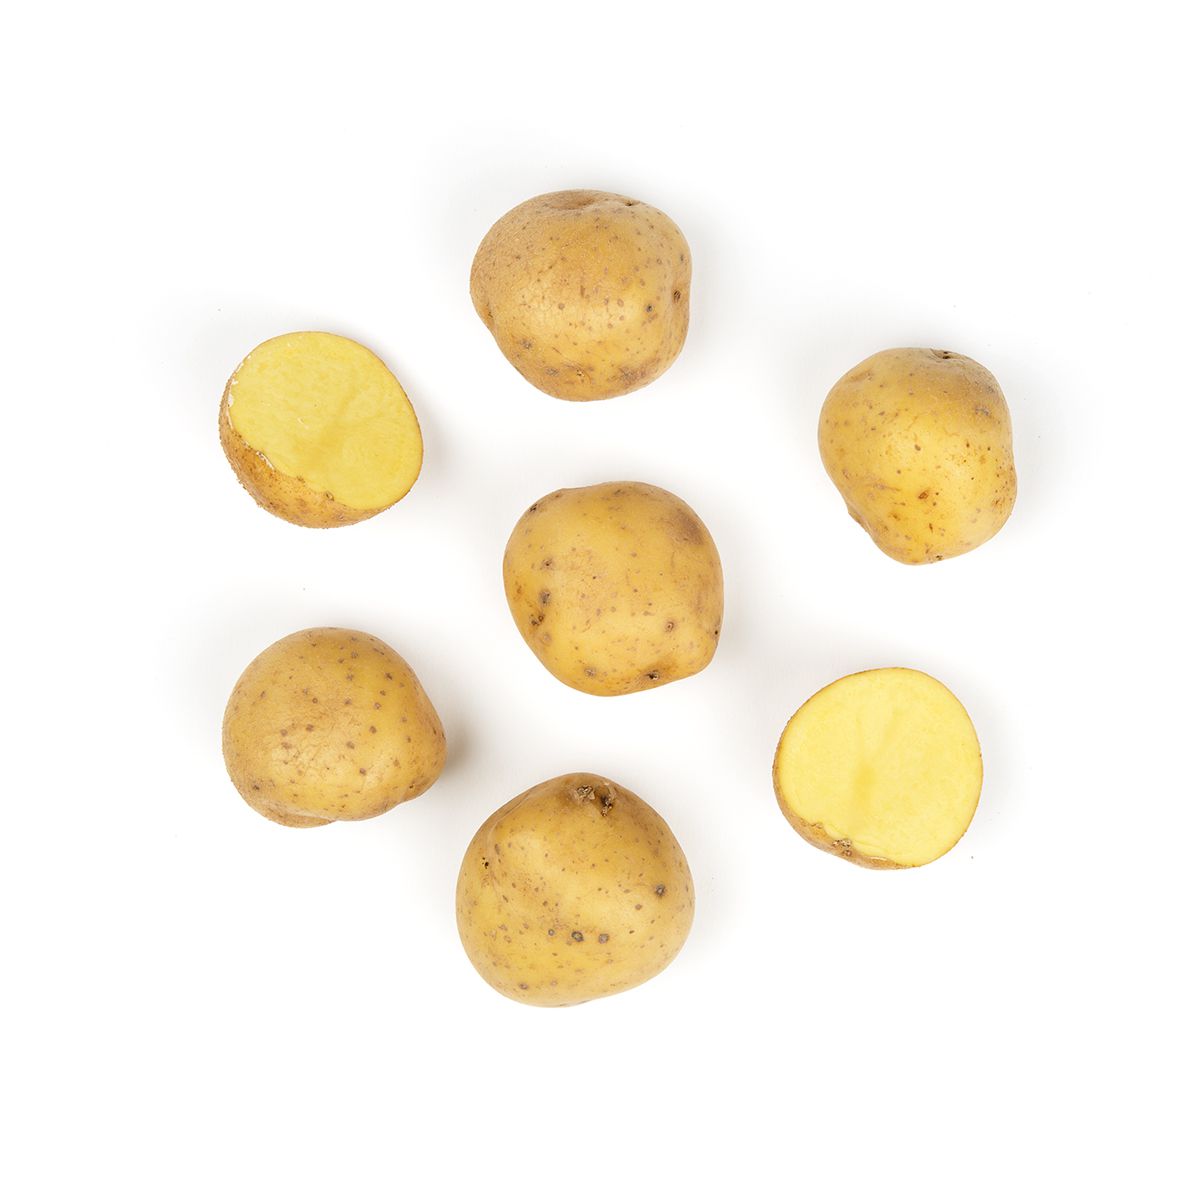 BoxNCase Medium Yukon B Potatoes